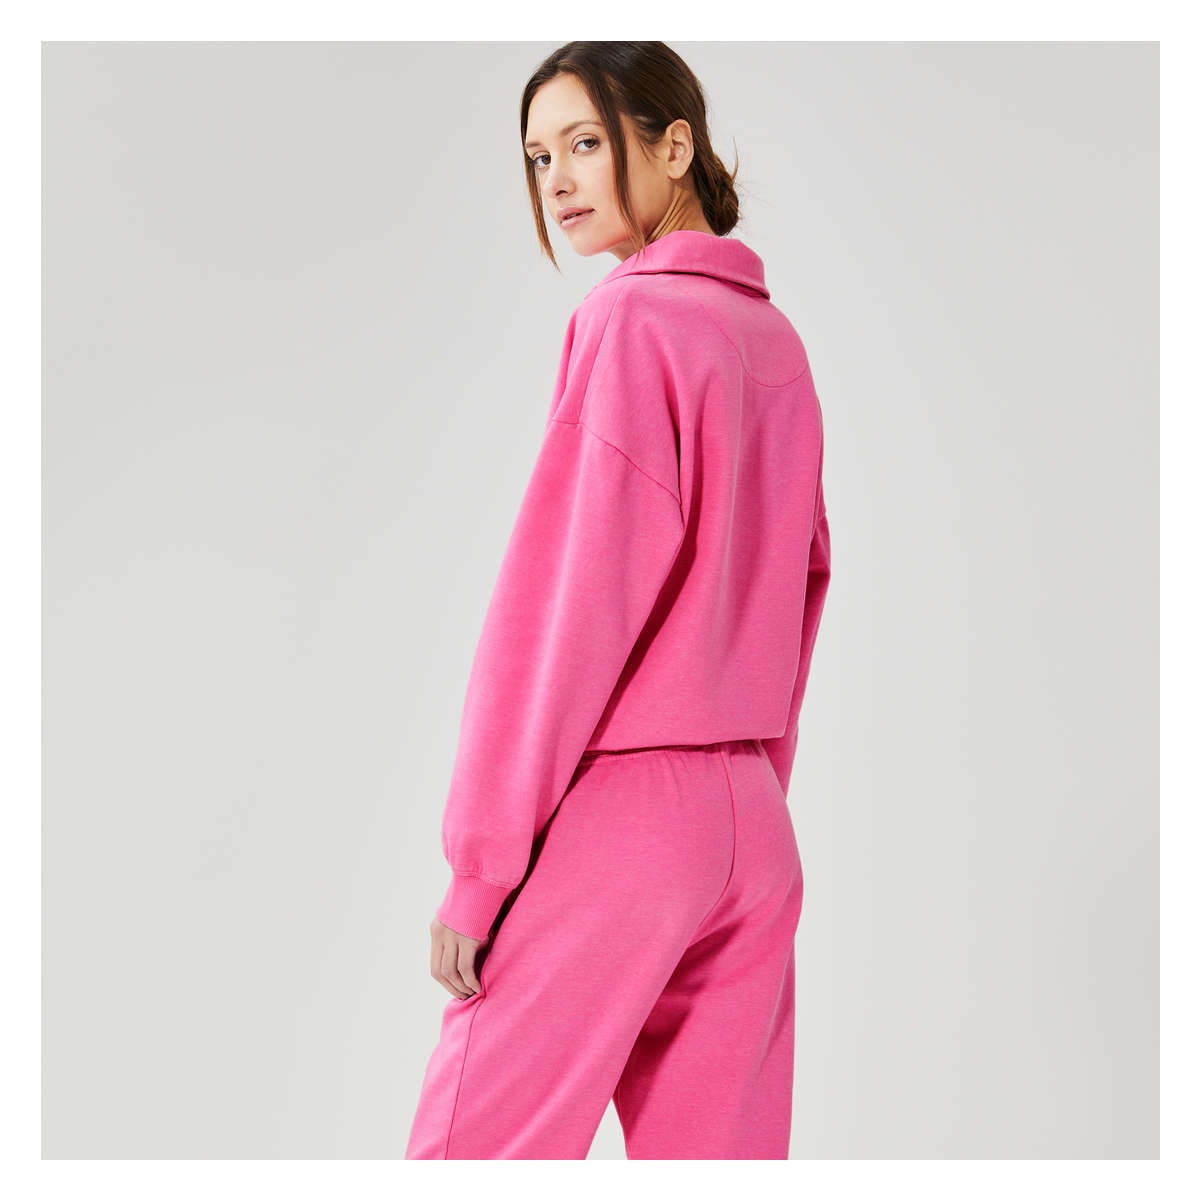 Women's Pink Joggers & Sweatpants